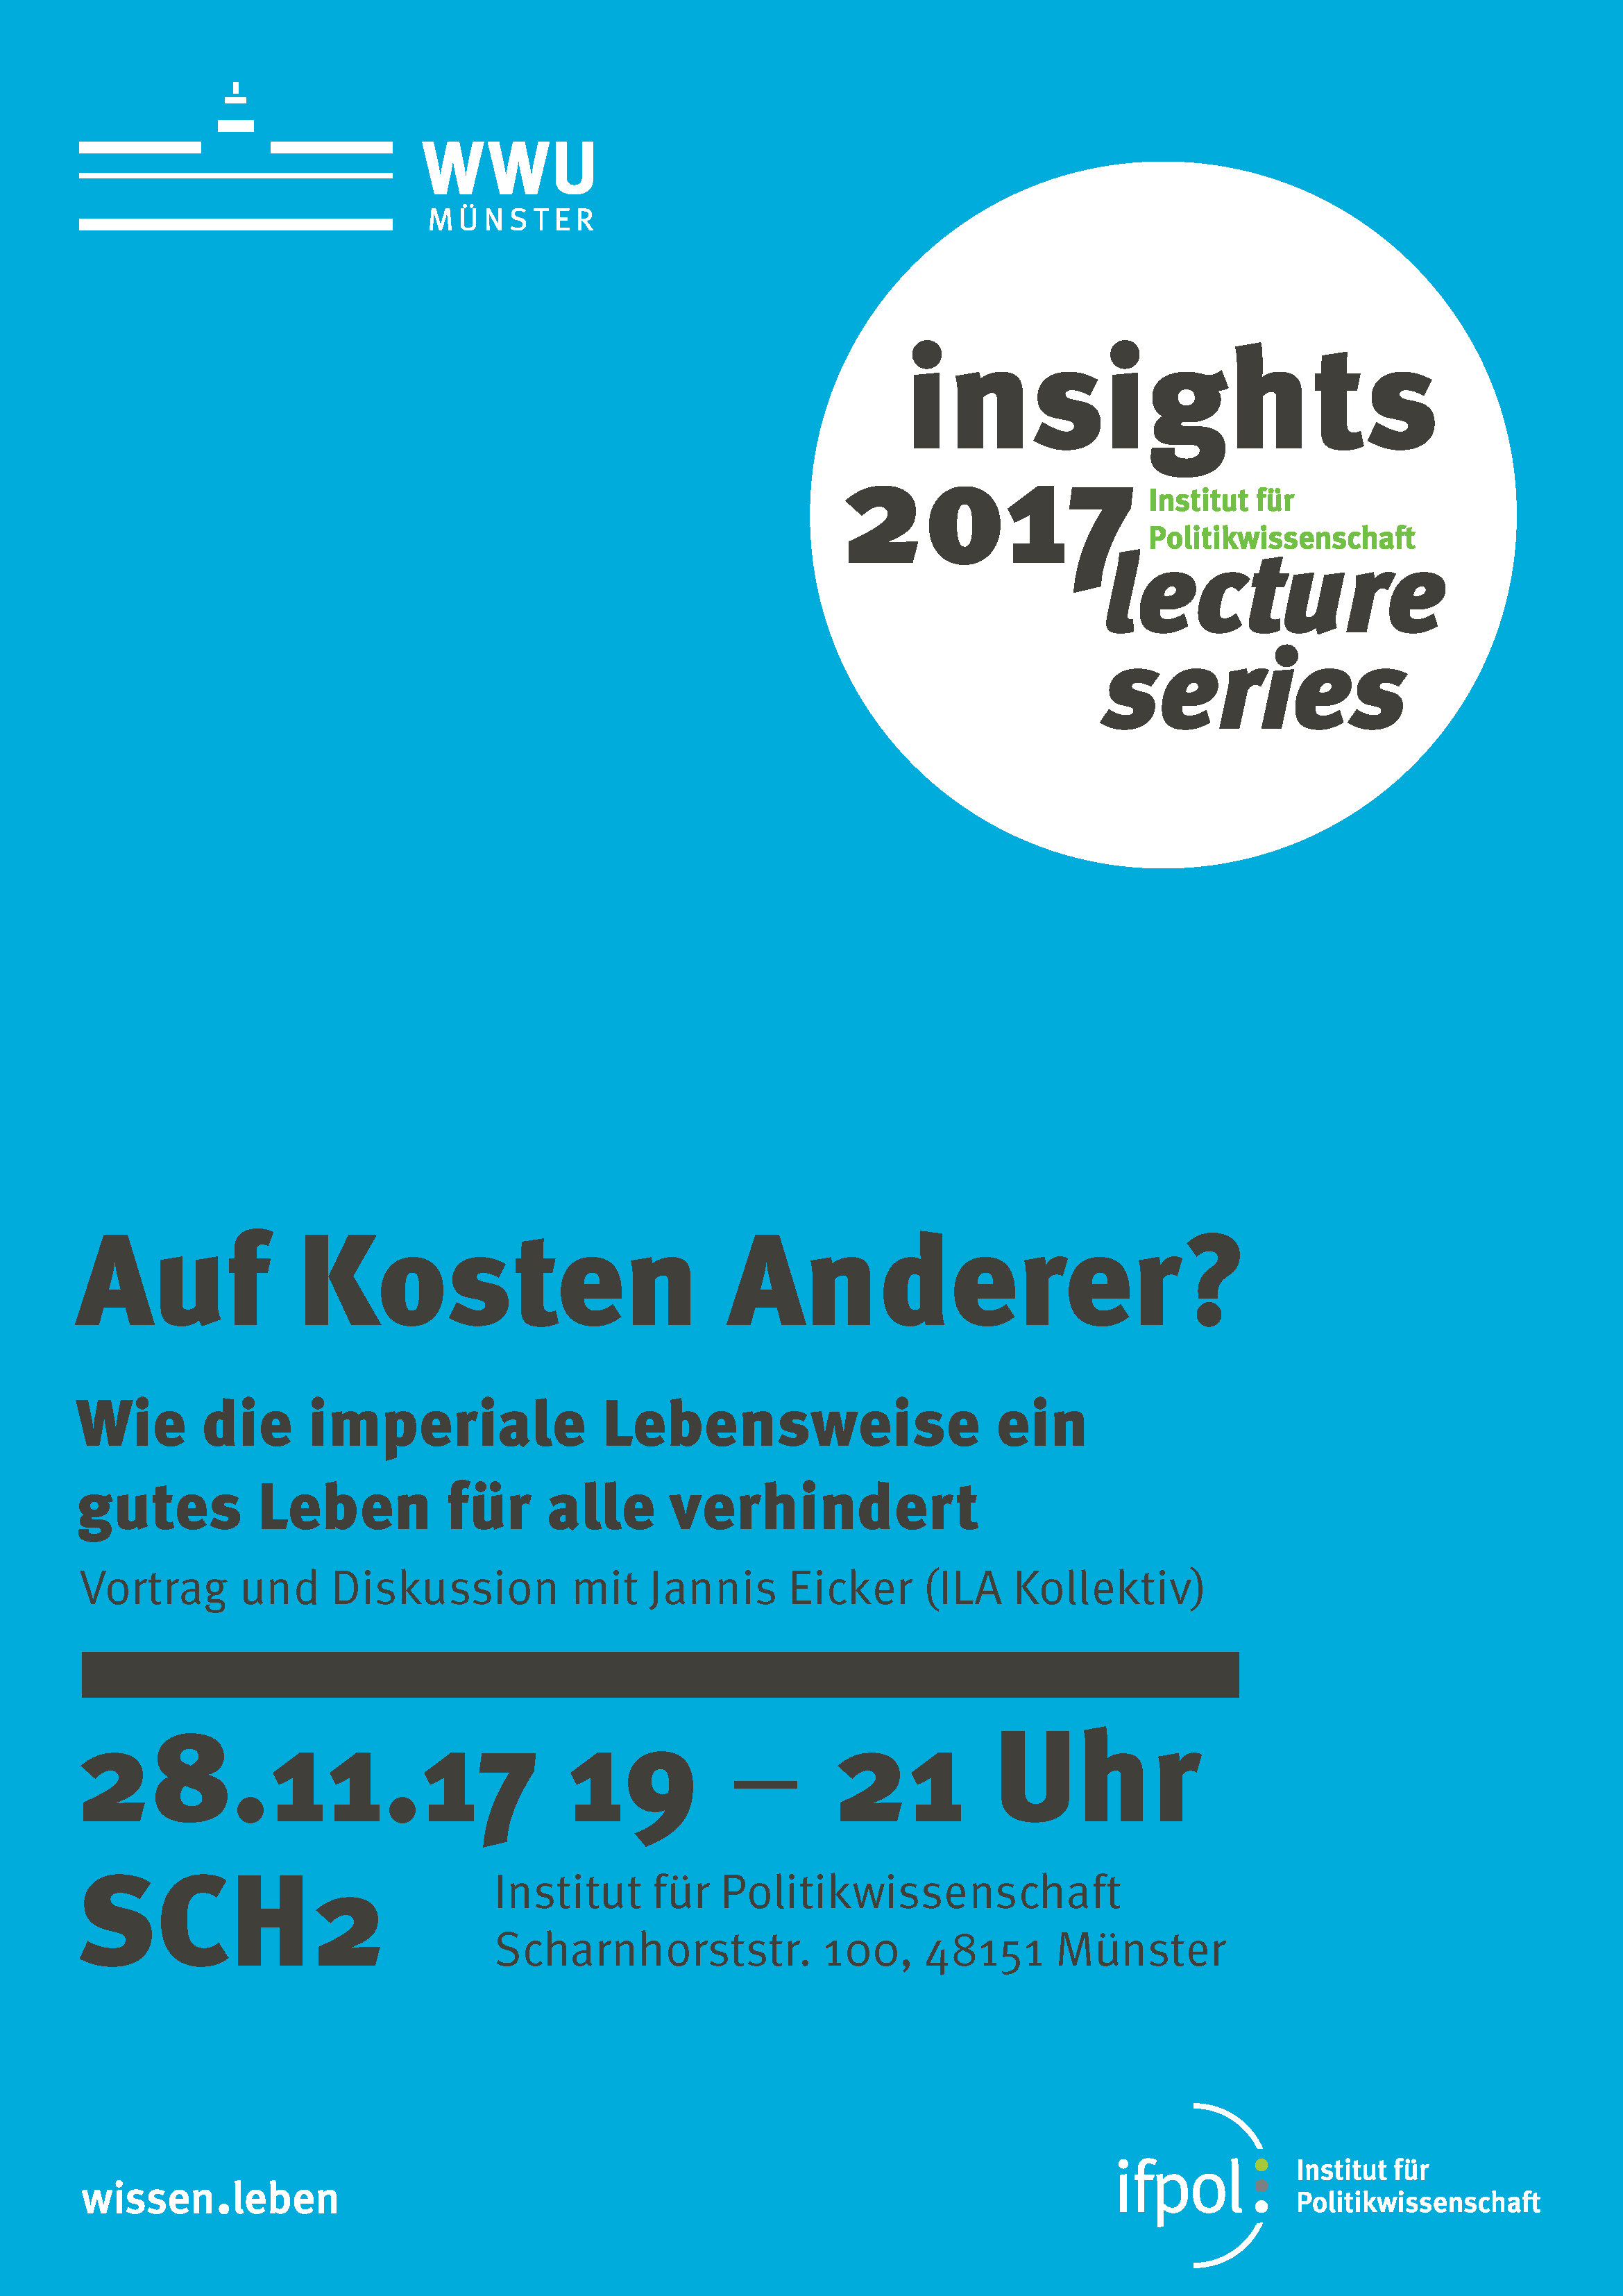 171121 Ifpol Insights Lecture Series Plakat2 Jeicker Rz Ansicht